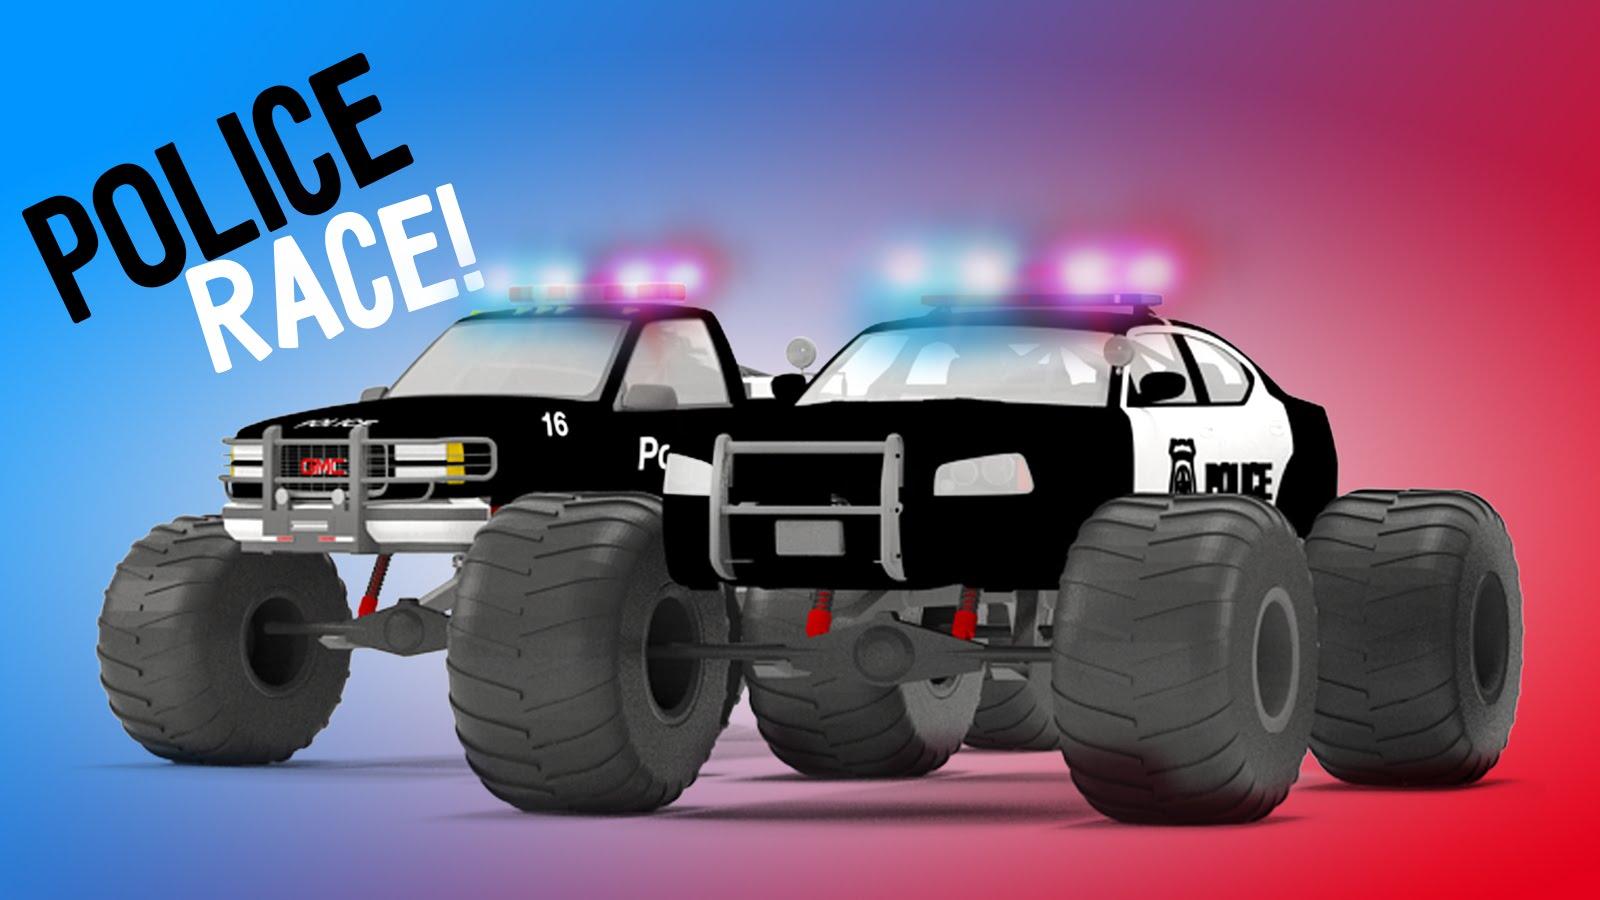 Police Monster Truck RaceD Video for Kids. Educational